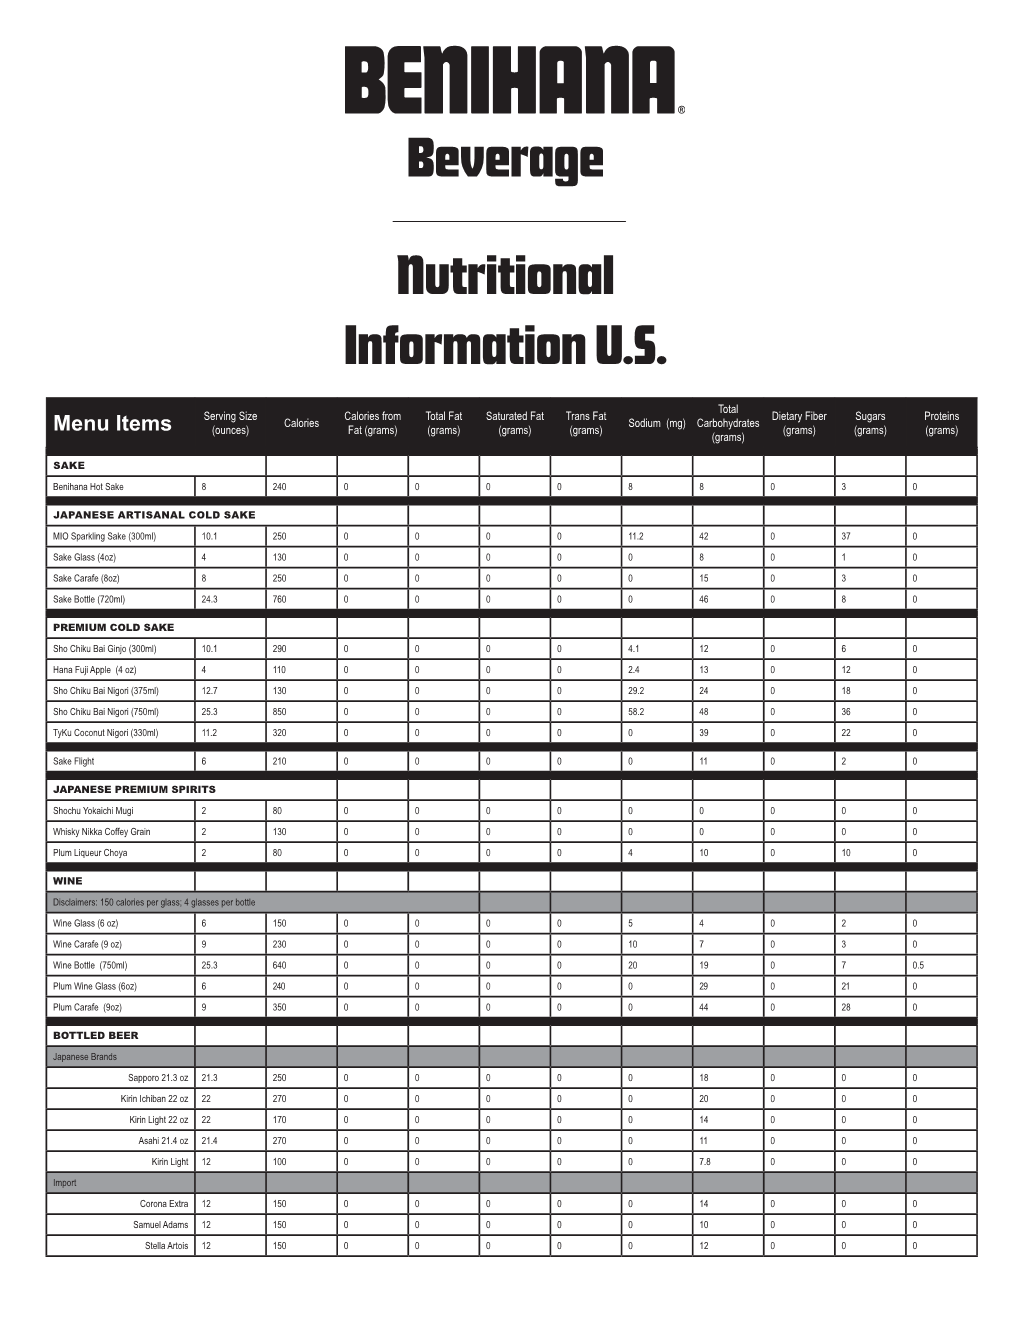 Nutritional Information U.S. Beverage